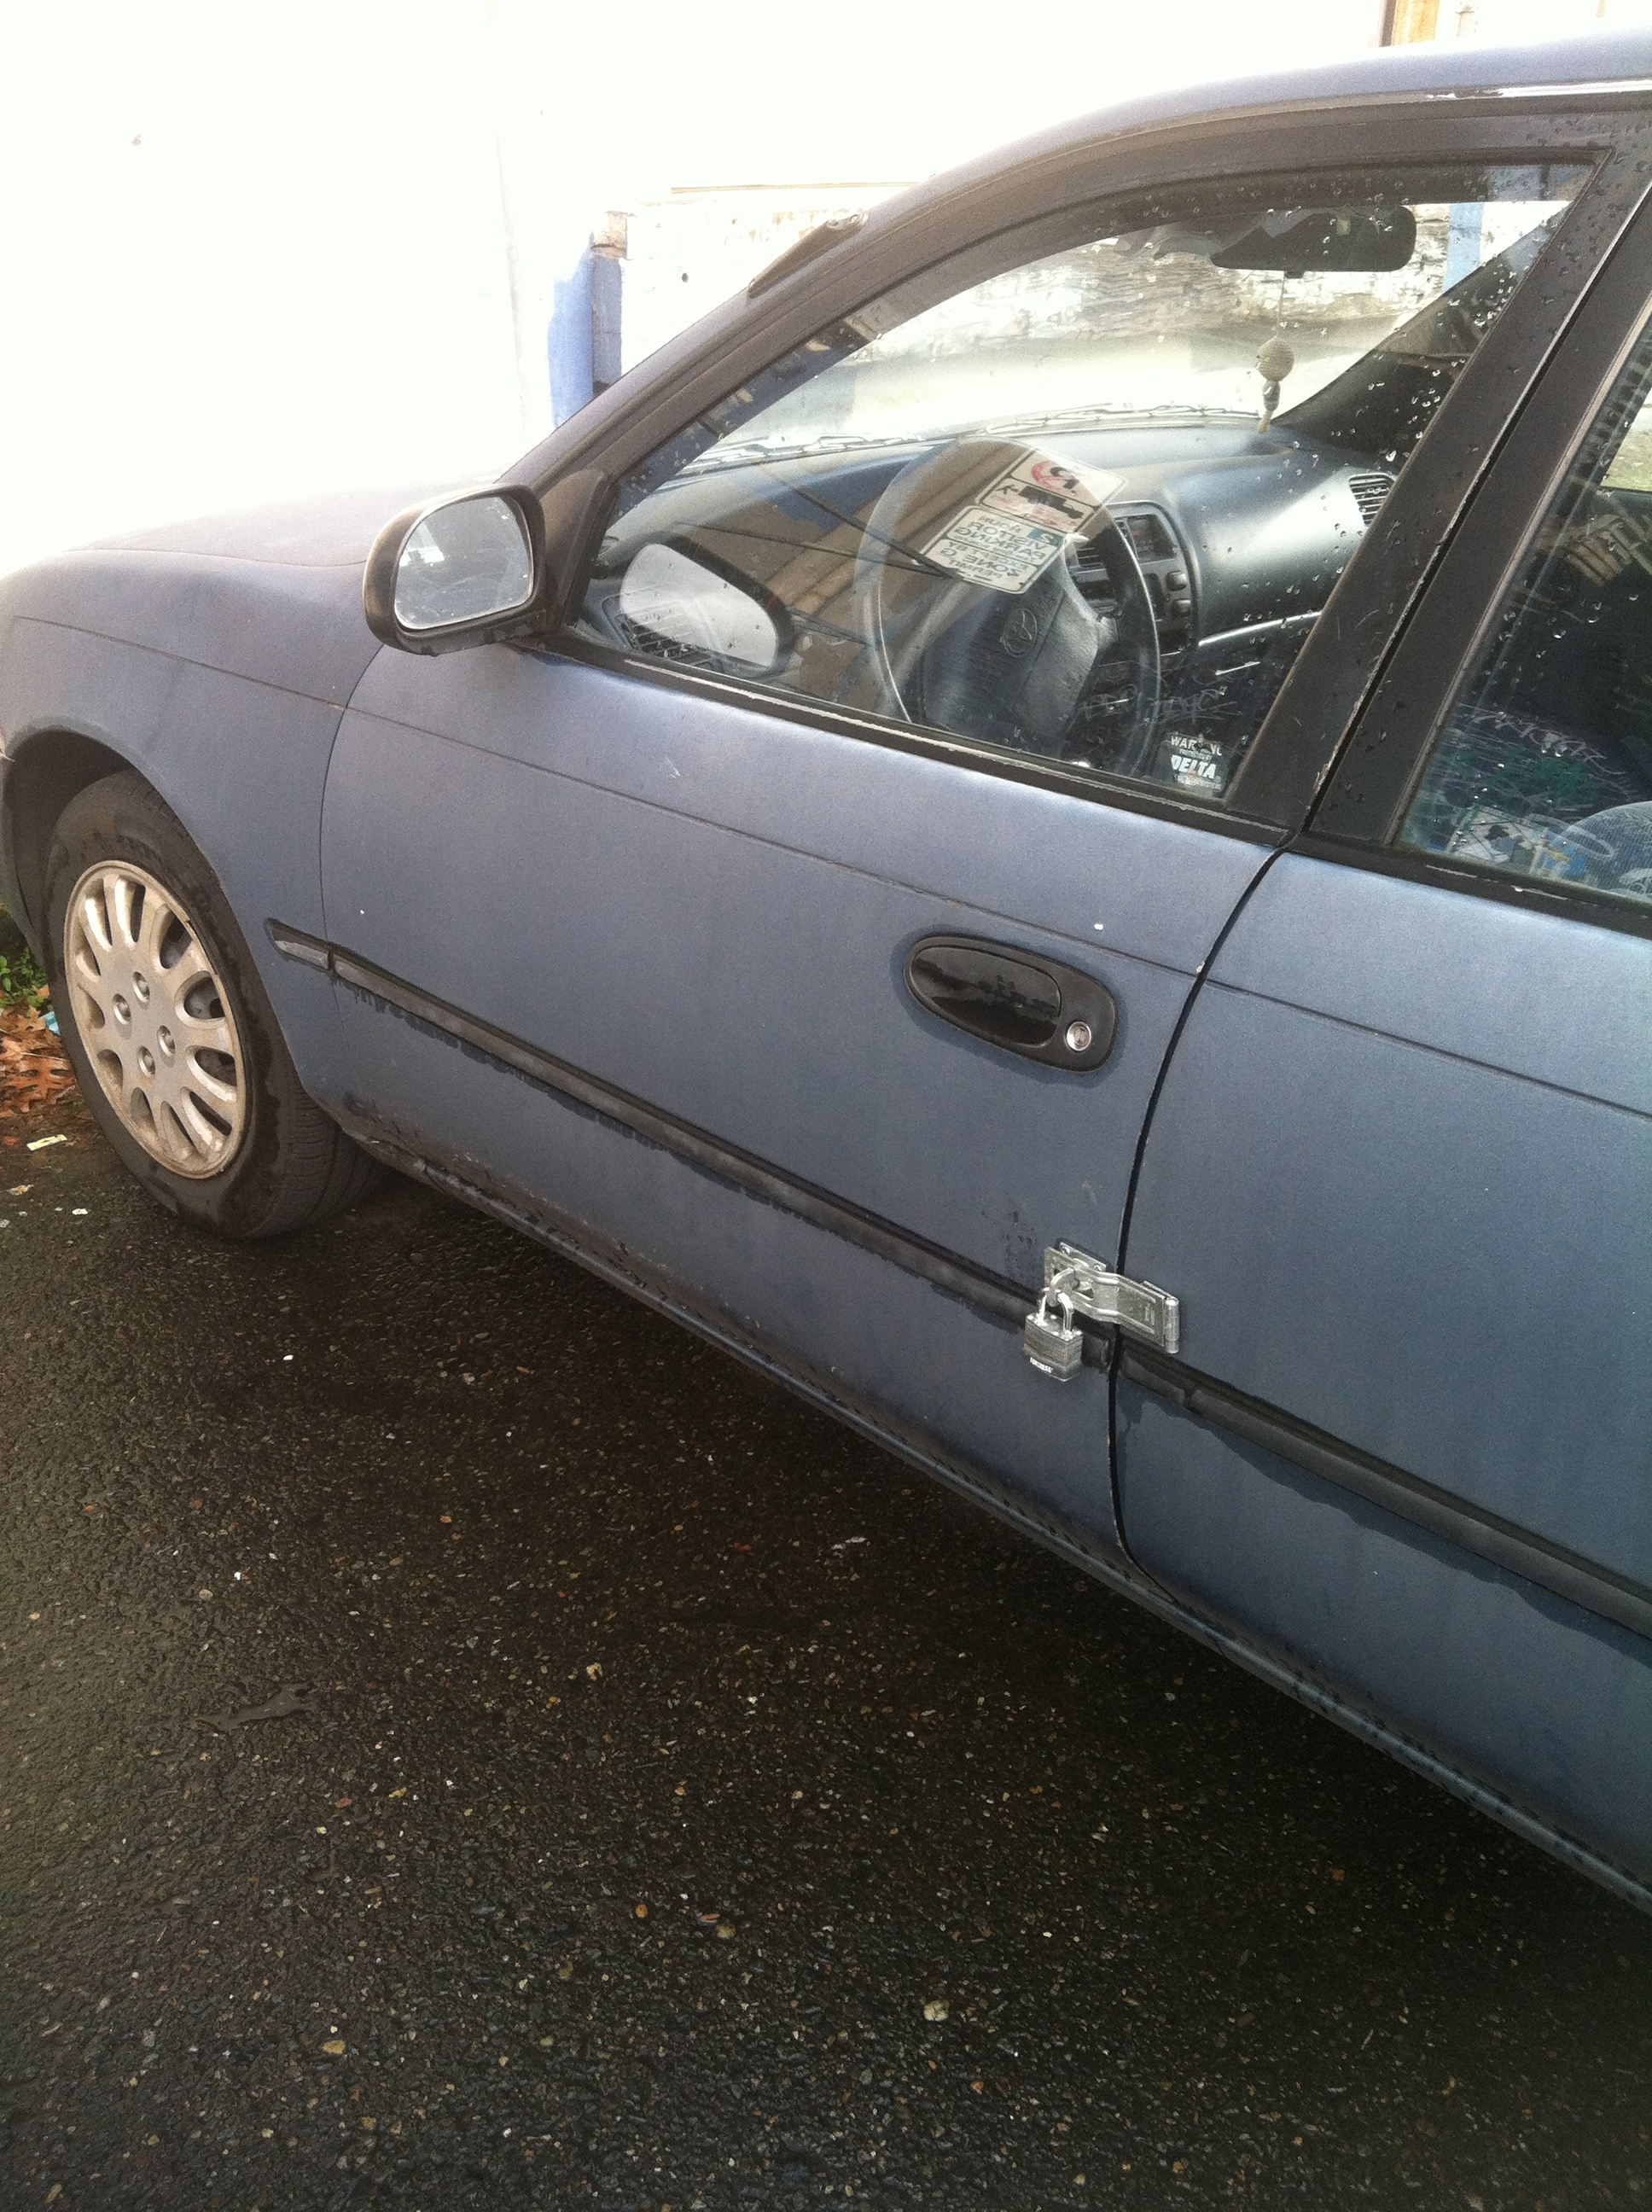 Ghetto ass car lock in SE PDX